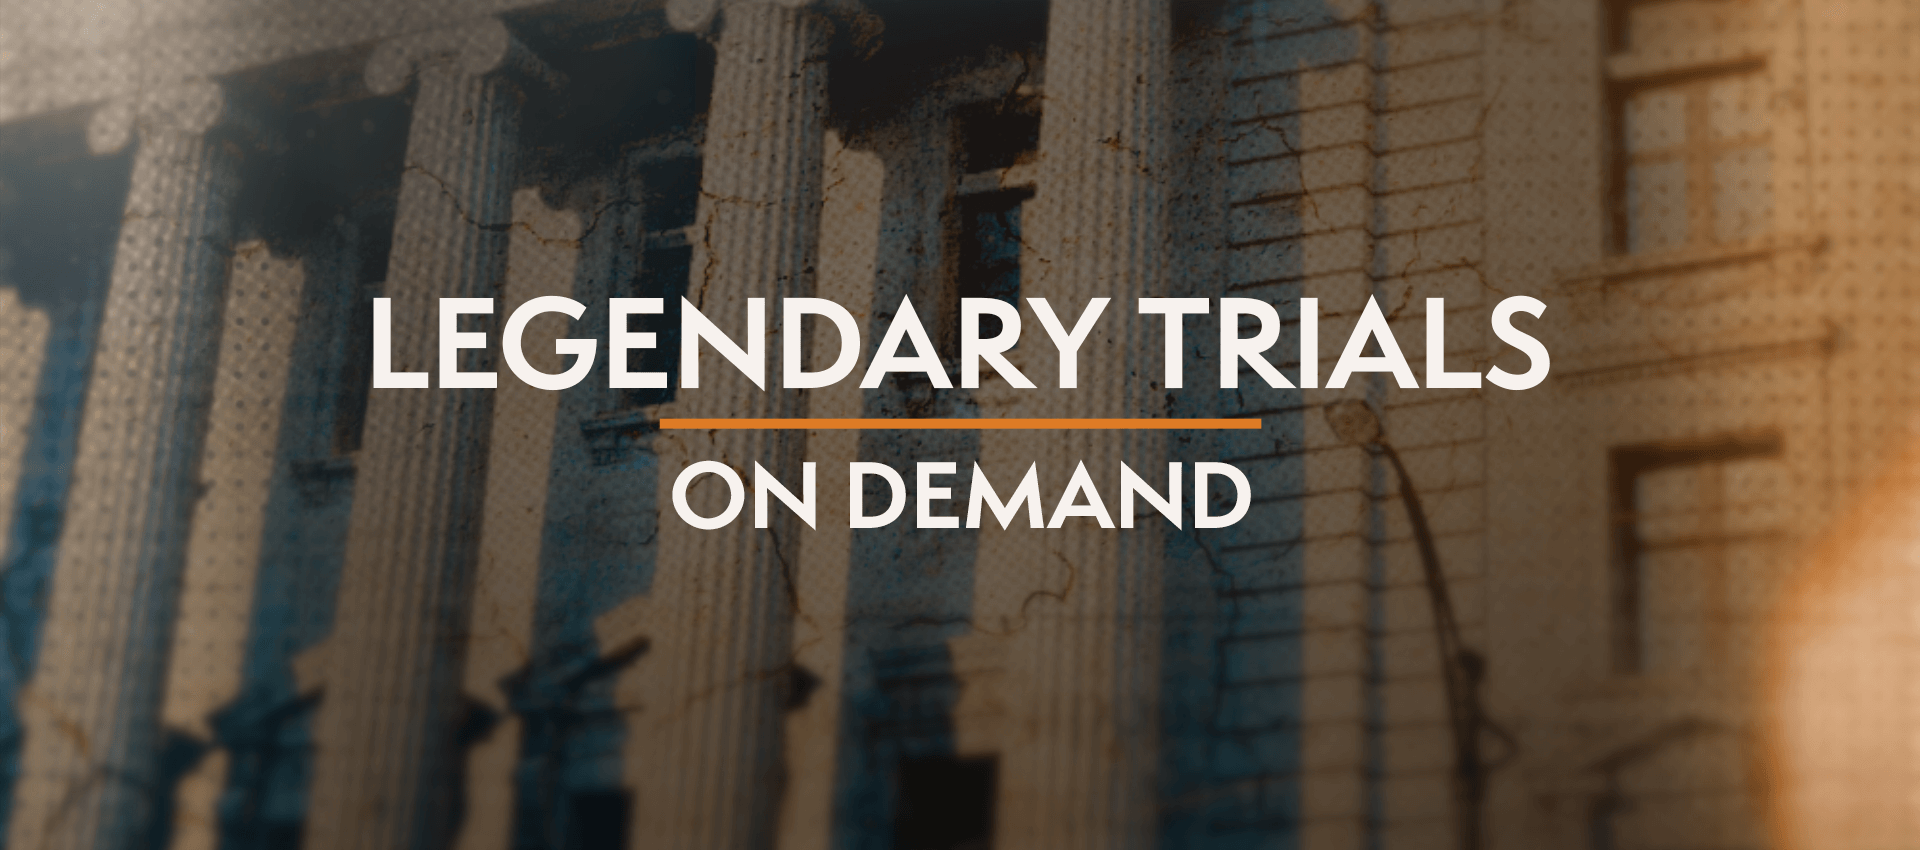 Legendary Trials On Demand